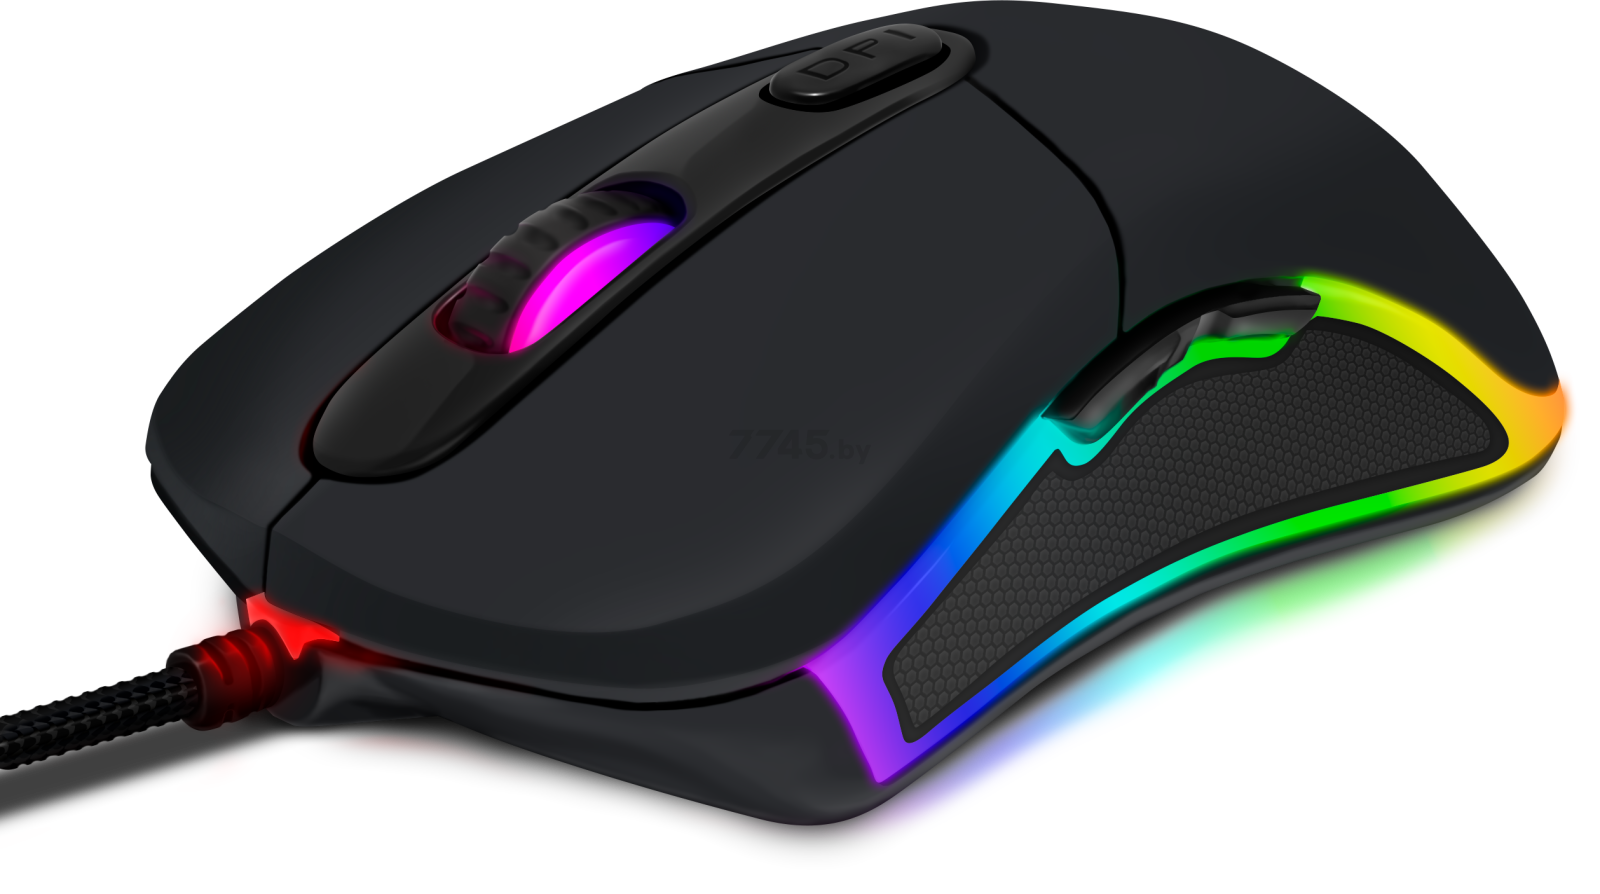 Мышь игровая QCYBER Hype RGB